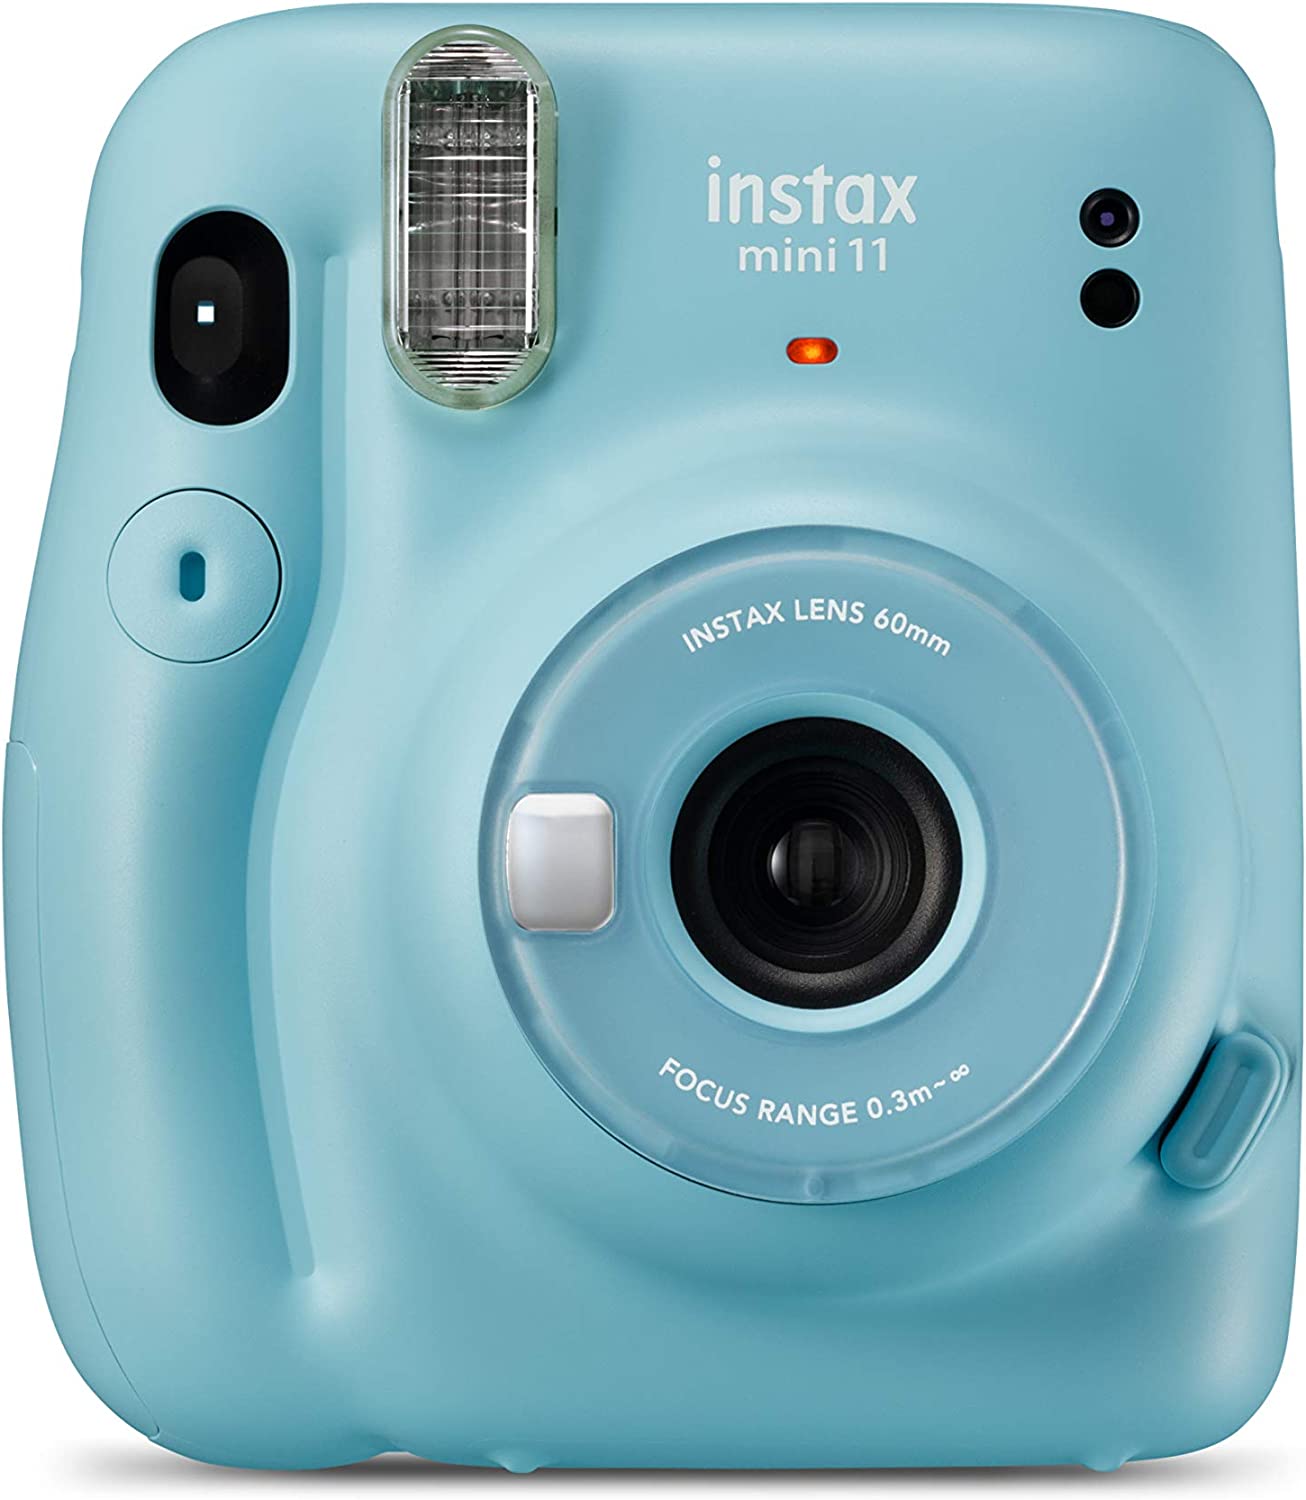 Product Image of Fujifilm Instax Mini 11 Instant Camera